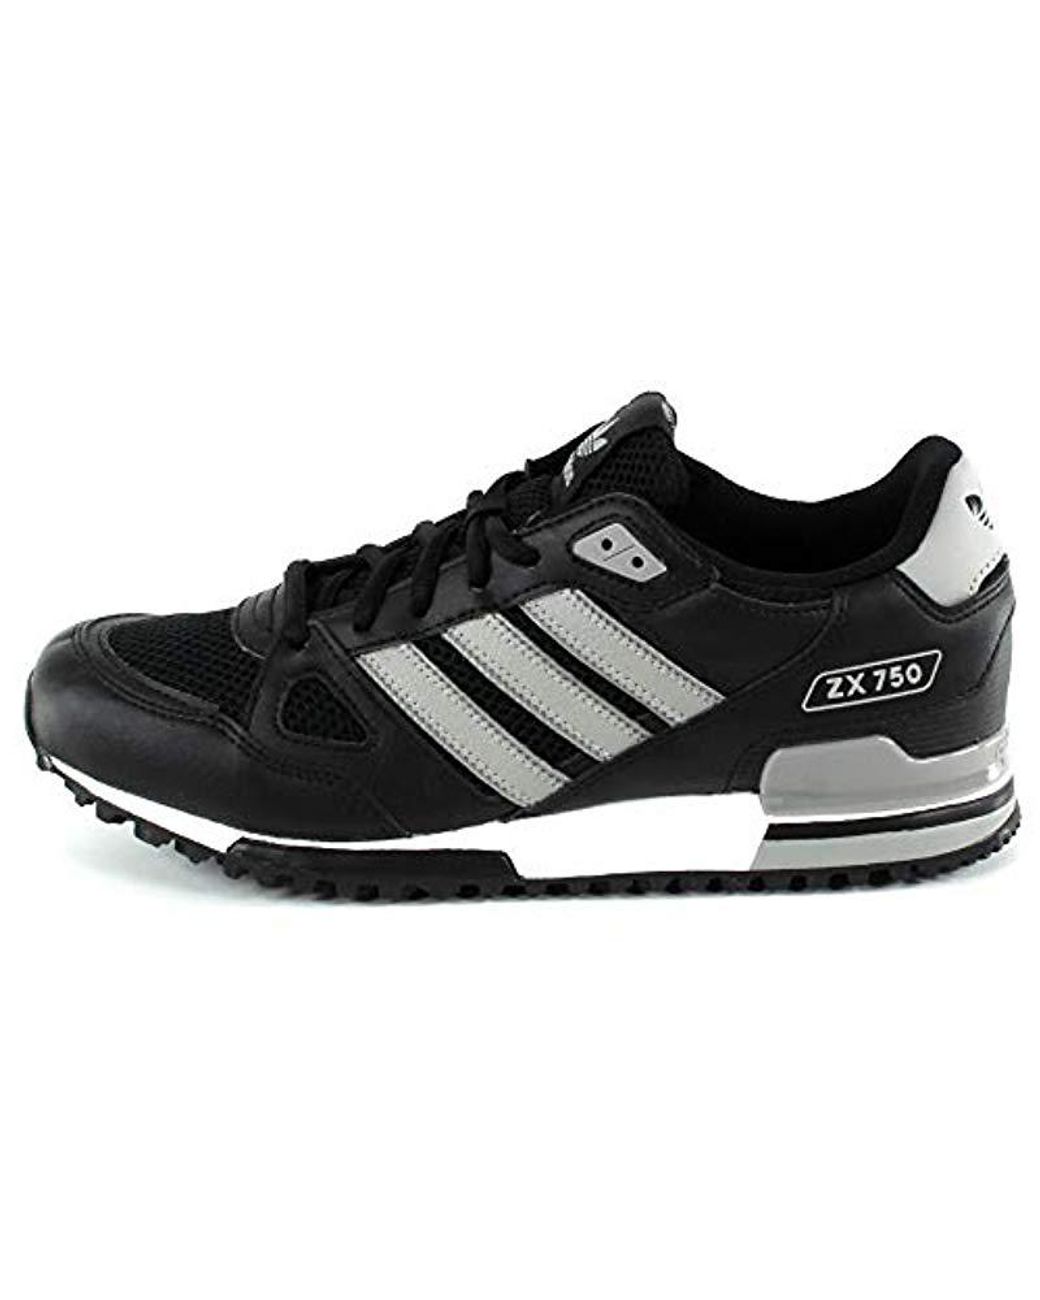 Adidas Zx 750 Leather Black Discount Online, 48% OFF | danmumm.com